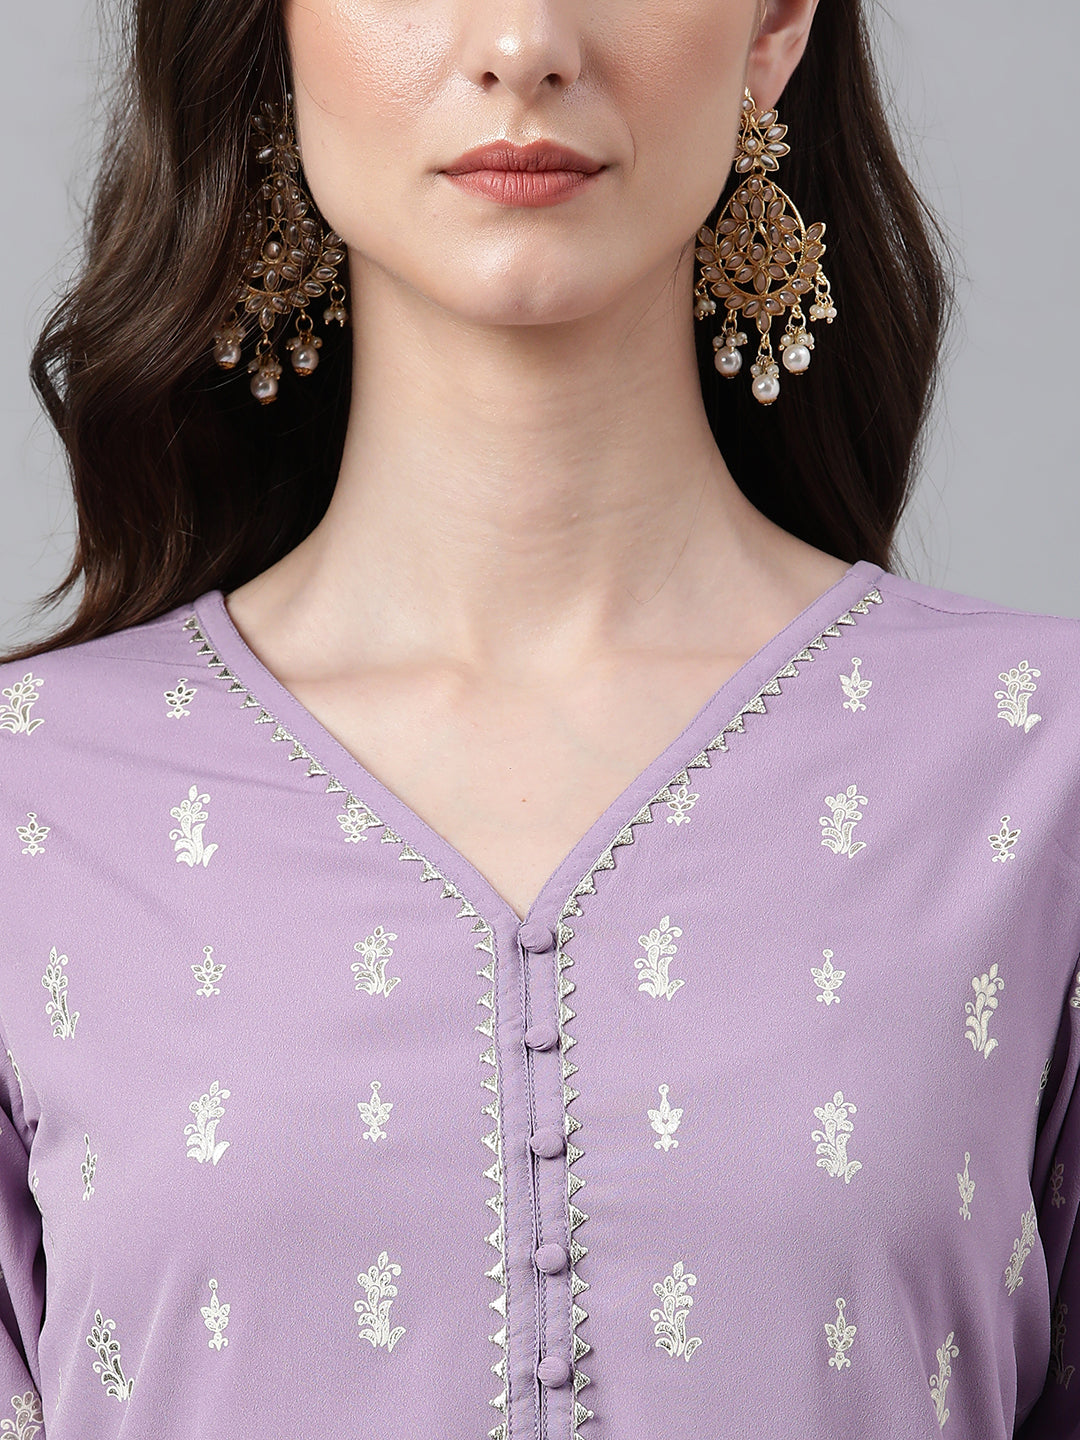 Buy Indian Clothing Janasya Women's Lavender Crepe Foil Print Casual  Straight Kurta Online at Best Price